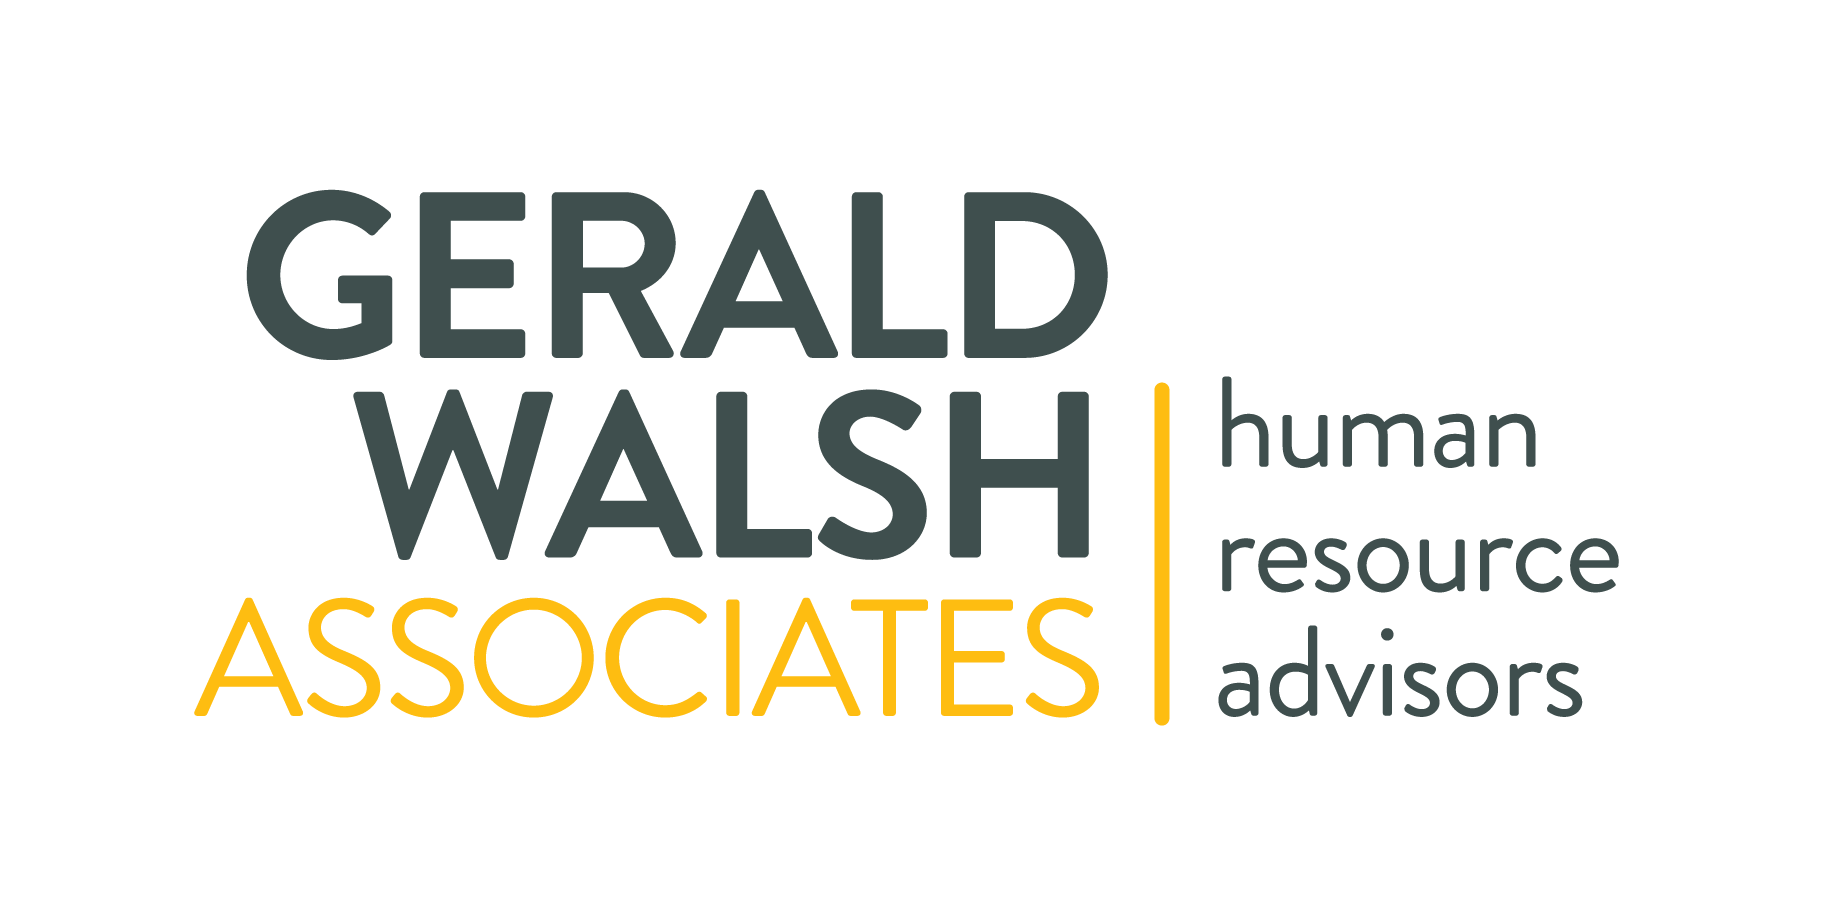 Gerald Walsh Associates Inc logo